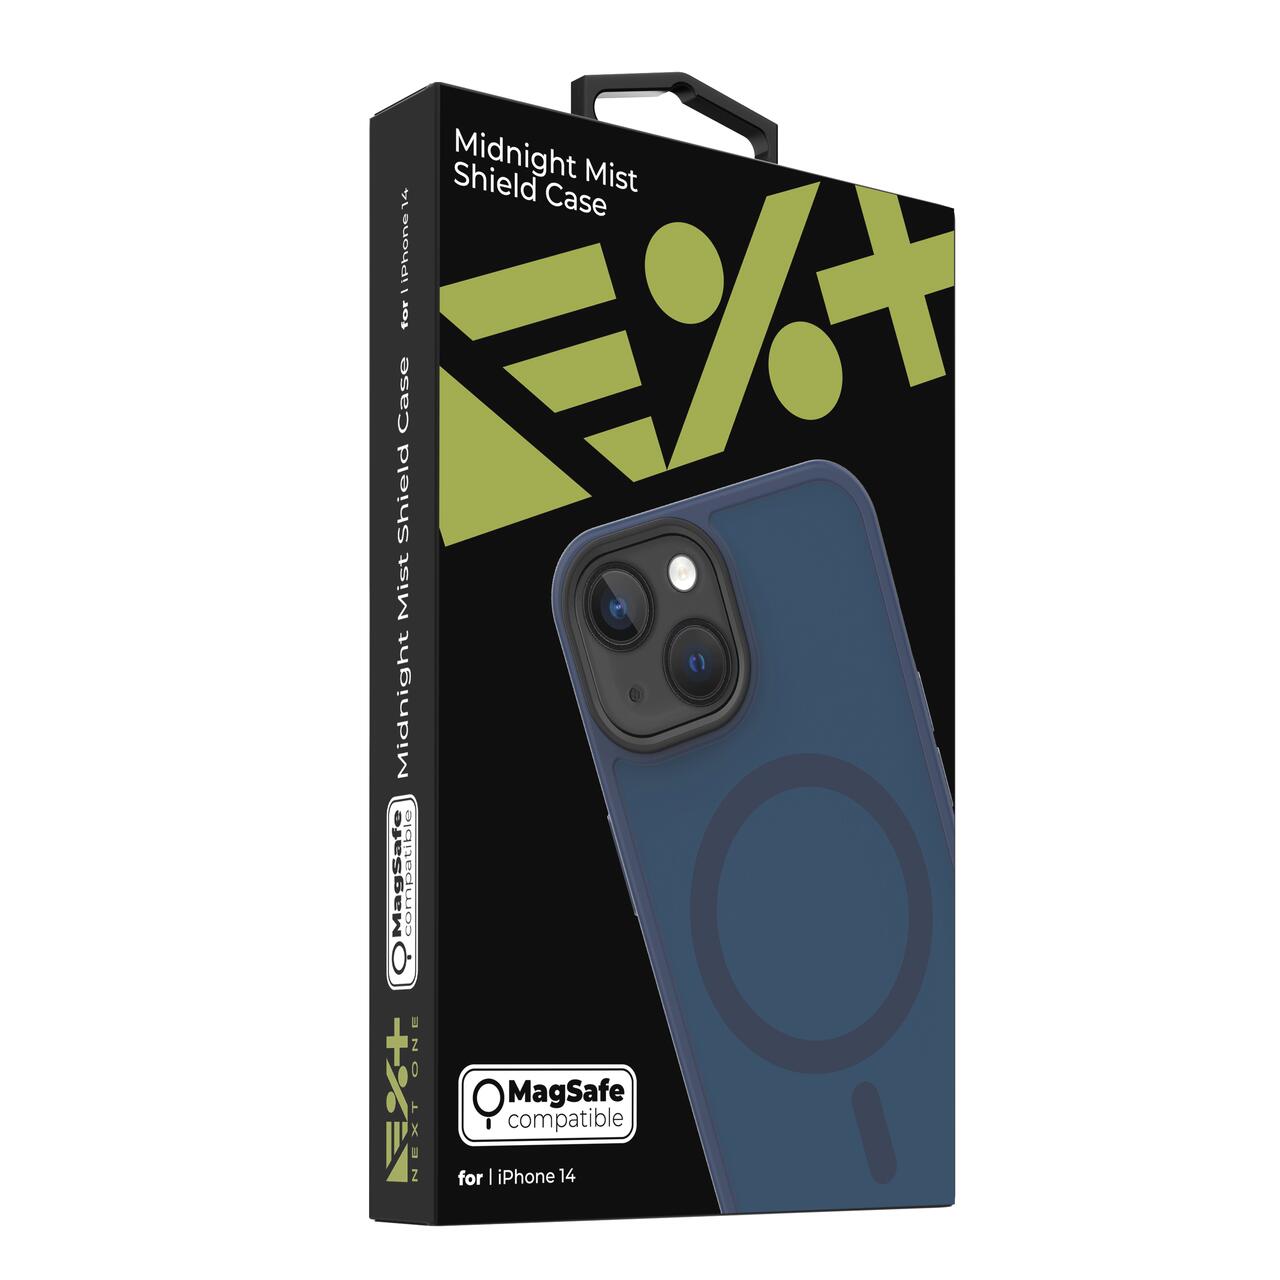 NEXT.ONE MagSafe Mist Shield Case - Midnight - iPhone 14